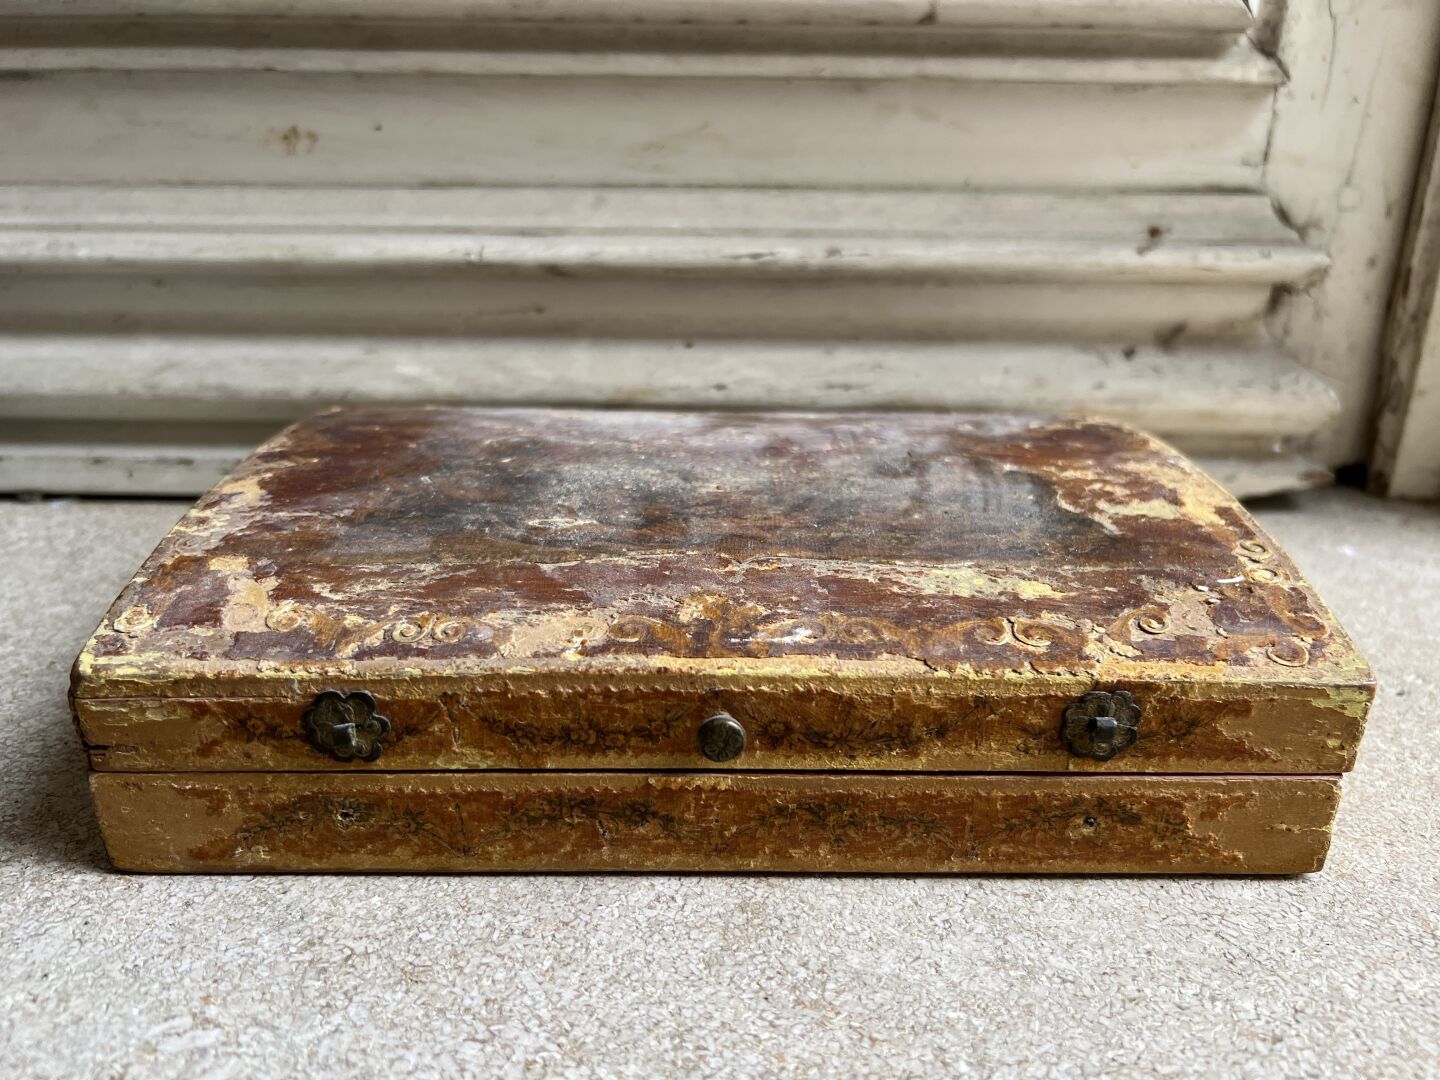 Null 18世纪的马丁清漆游戏盒。
22,5 x 18 cm
如是